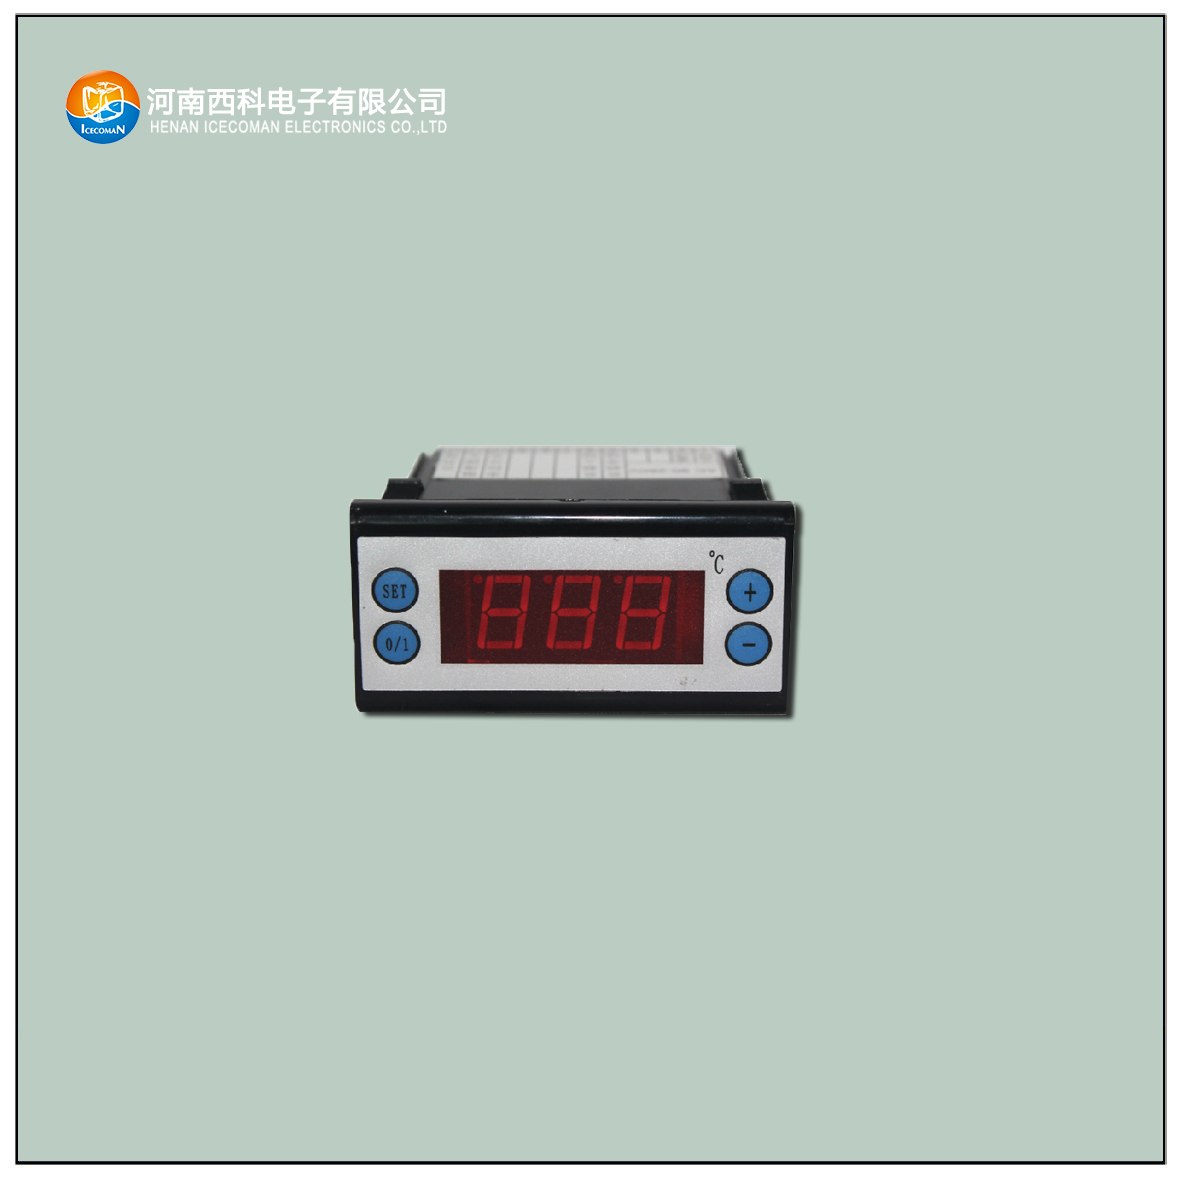 Wkq-smg-a temperature controller